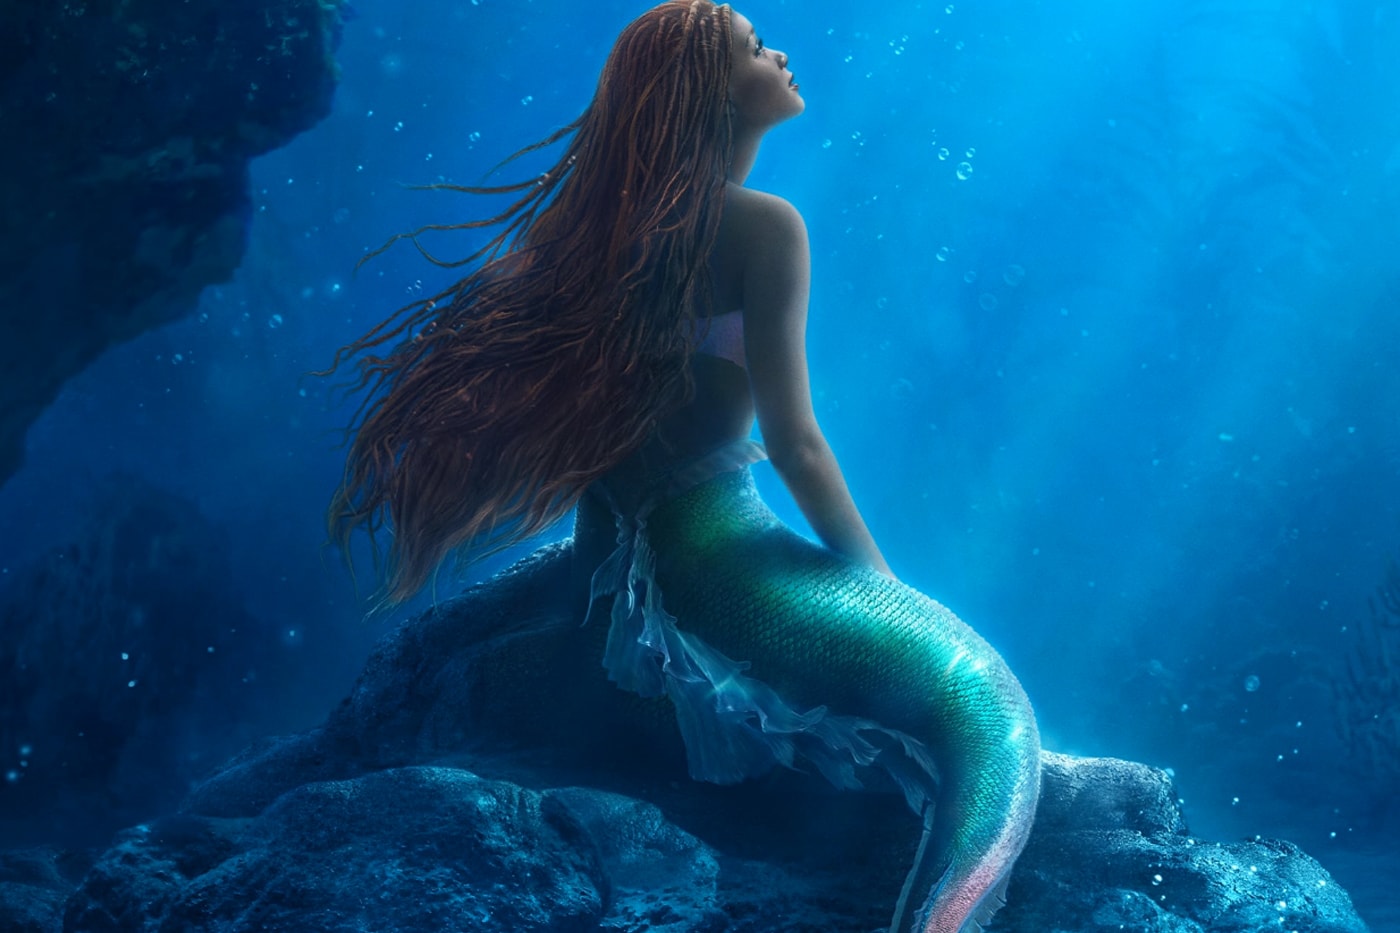 disney The Little Mermaid 118 million USD memorial day weekend Box Office Debut